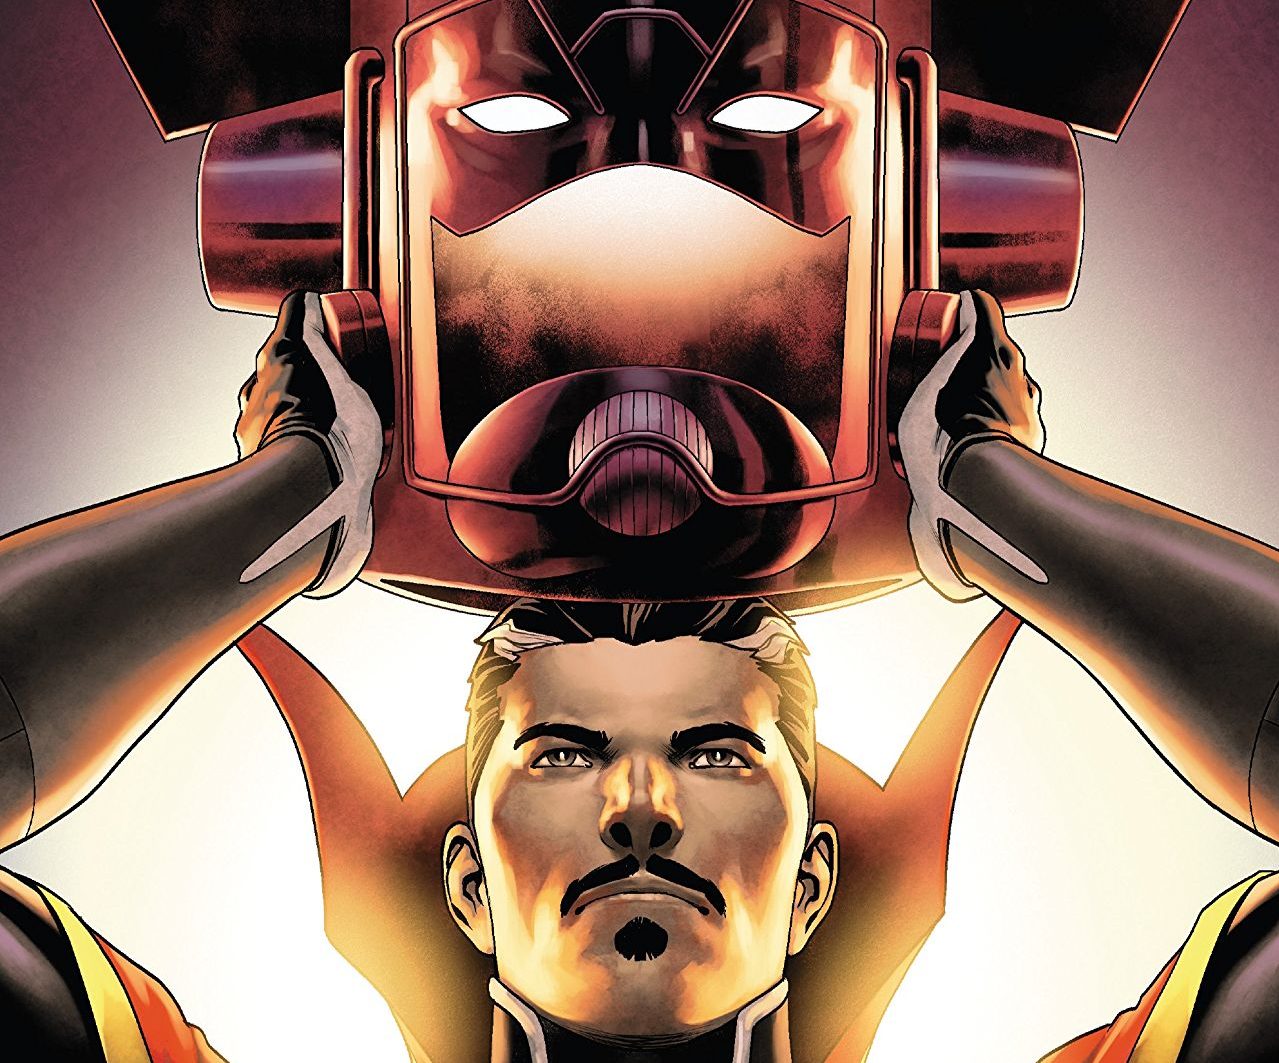 Marvel Preview: Doctor Strange #13